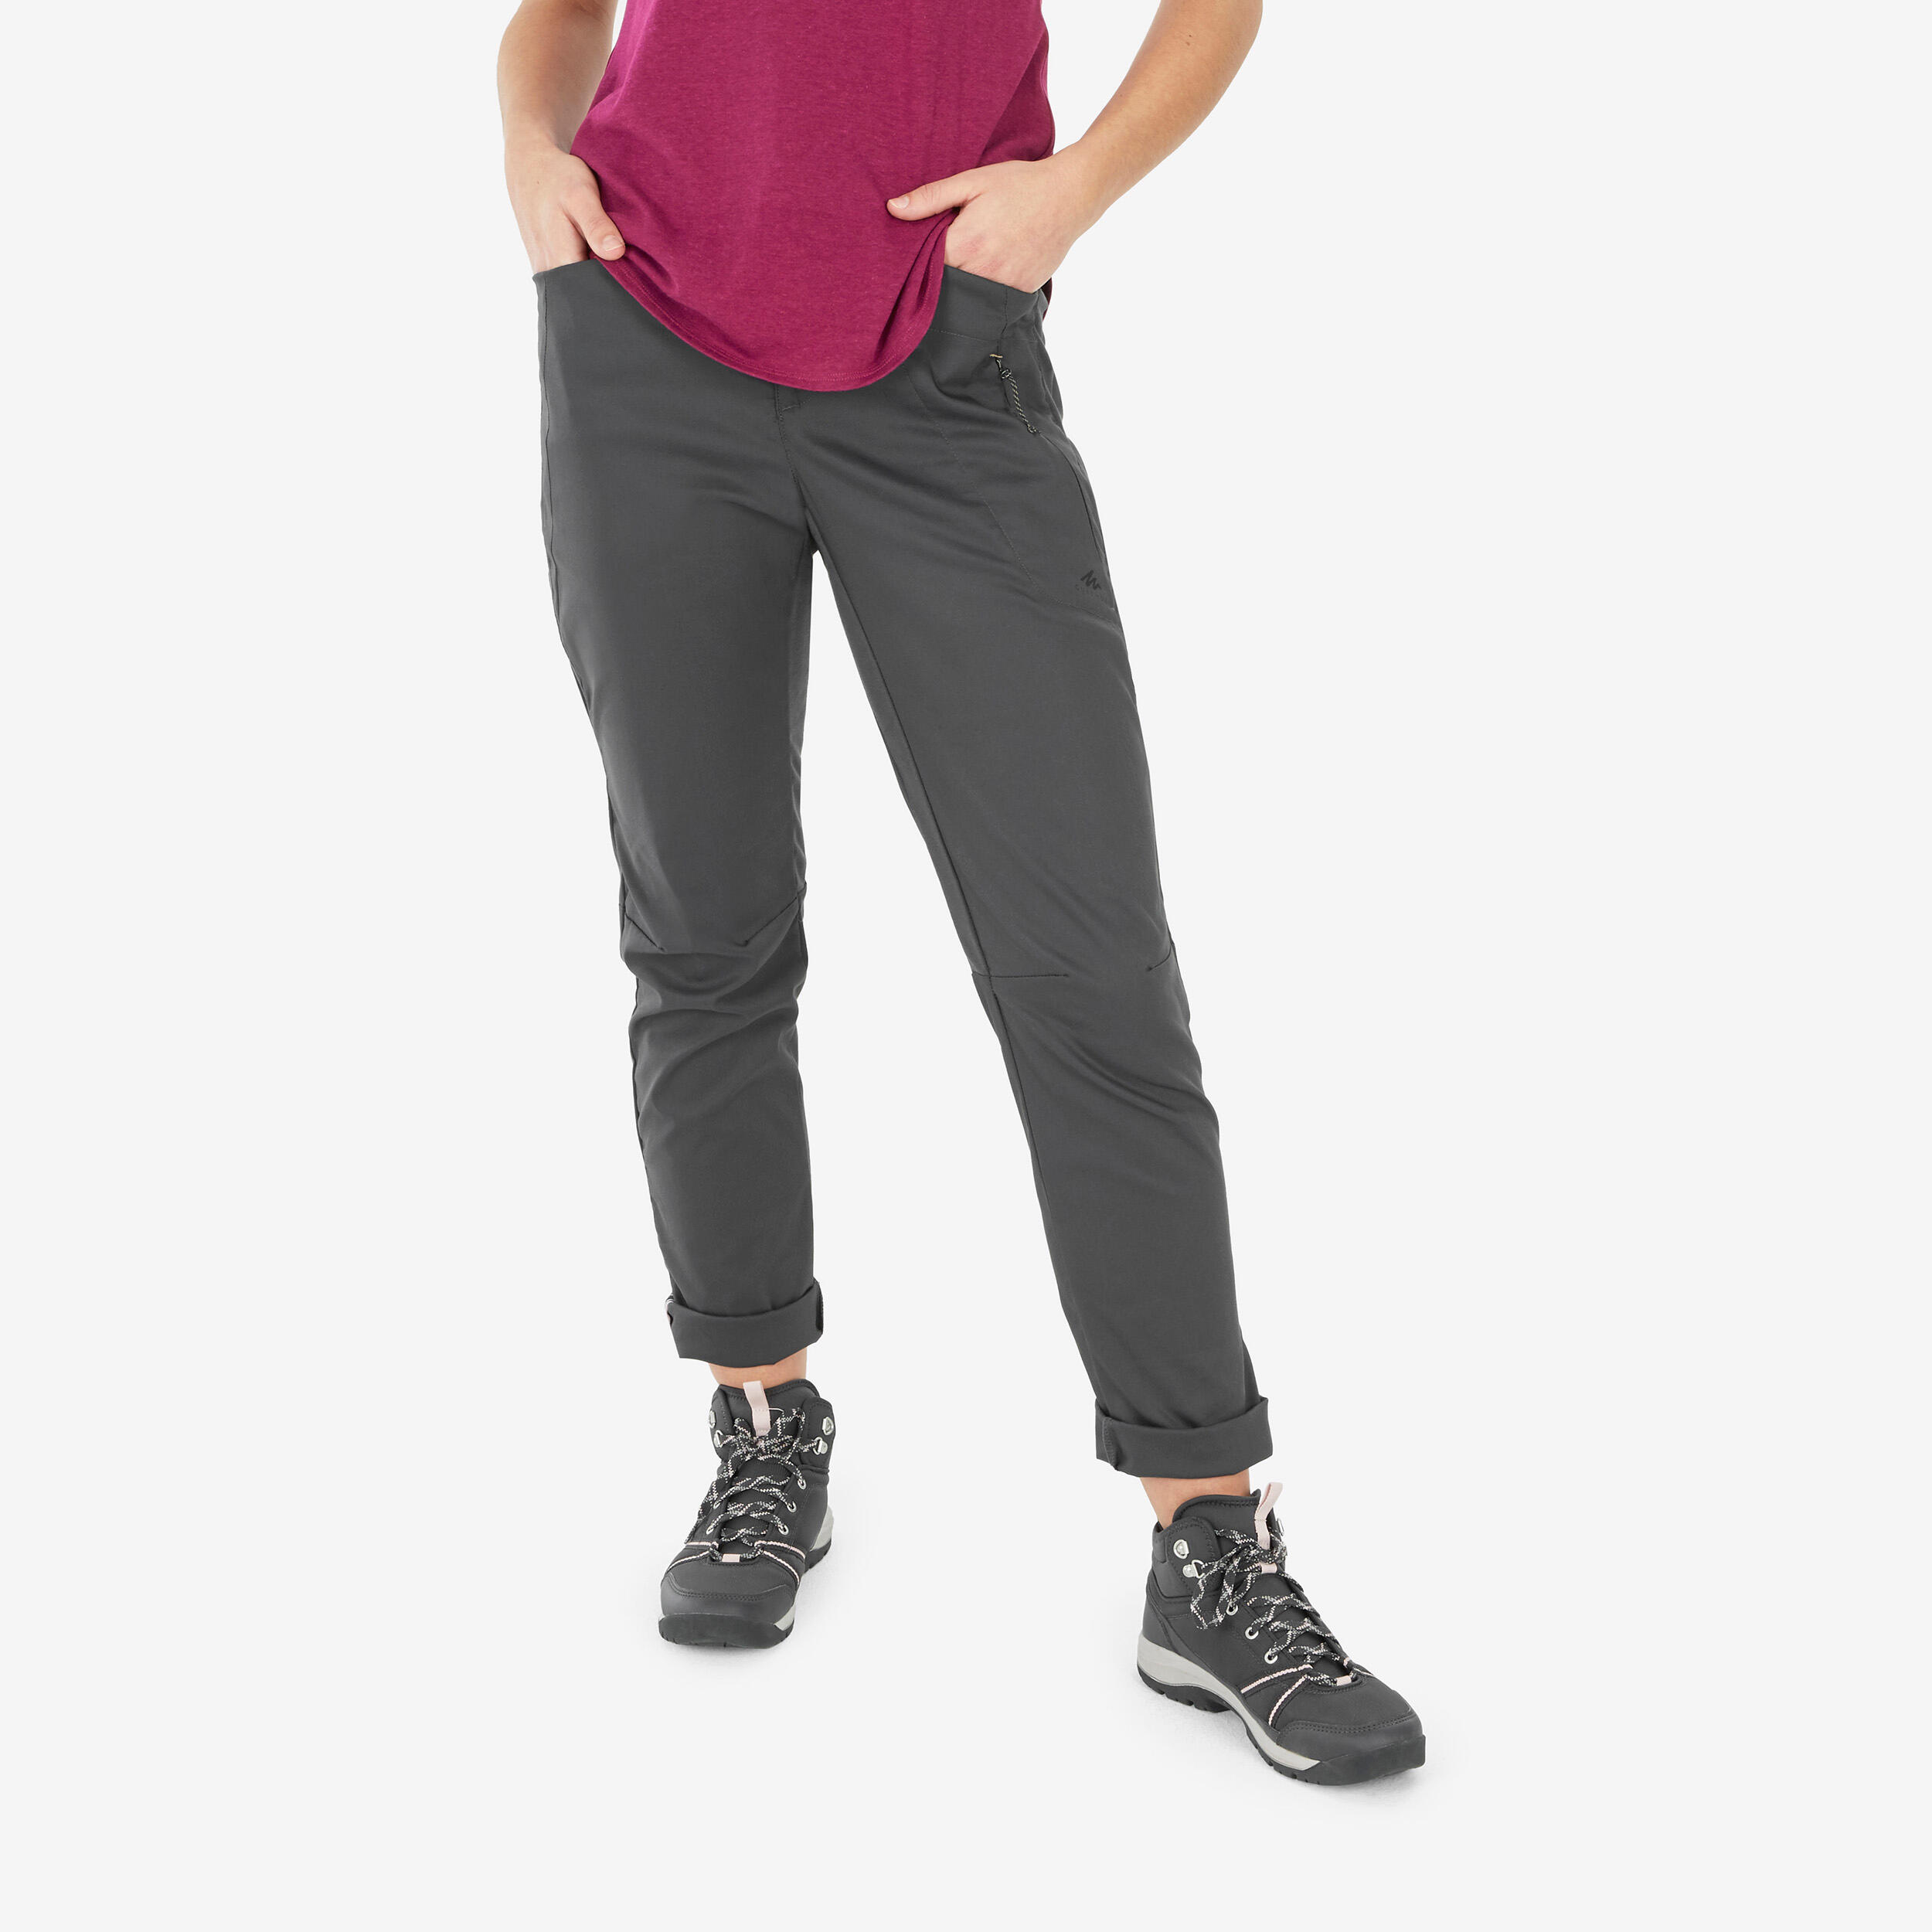 Women's Hiking Pants - MT 500 Grey - Carbon grey, Black, Carbon grey -  Forclaz - Decathlon